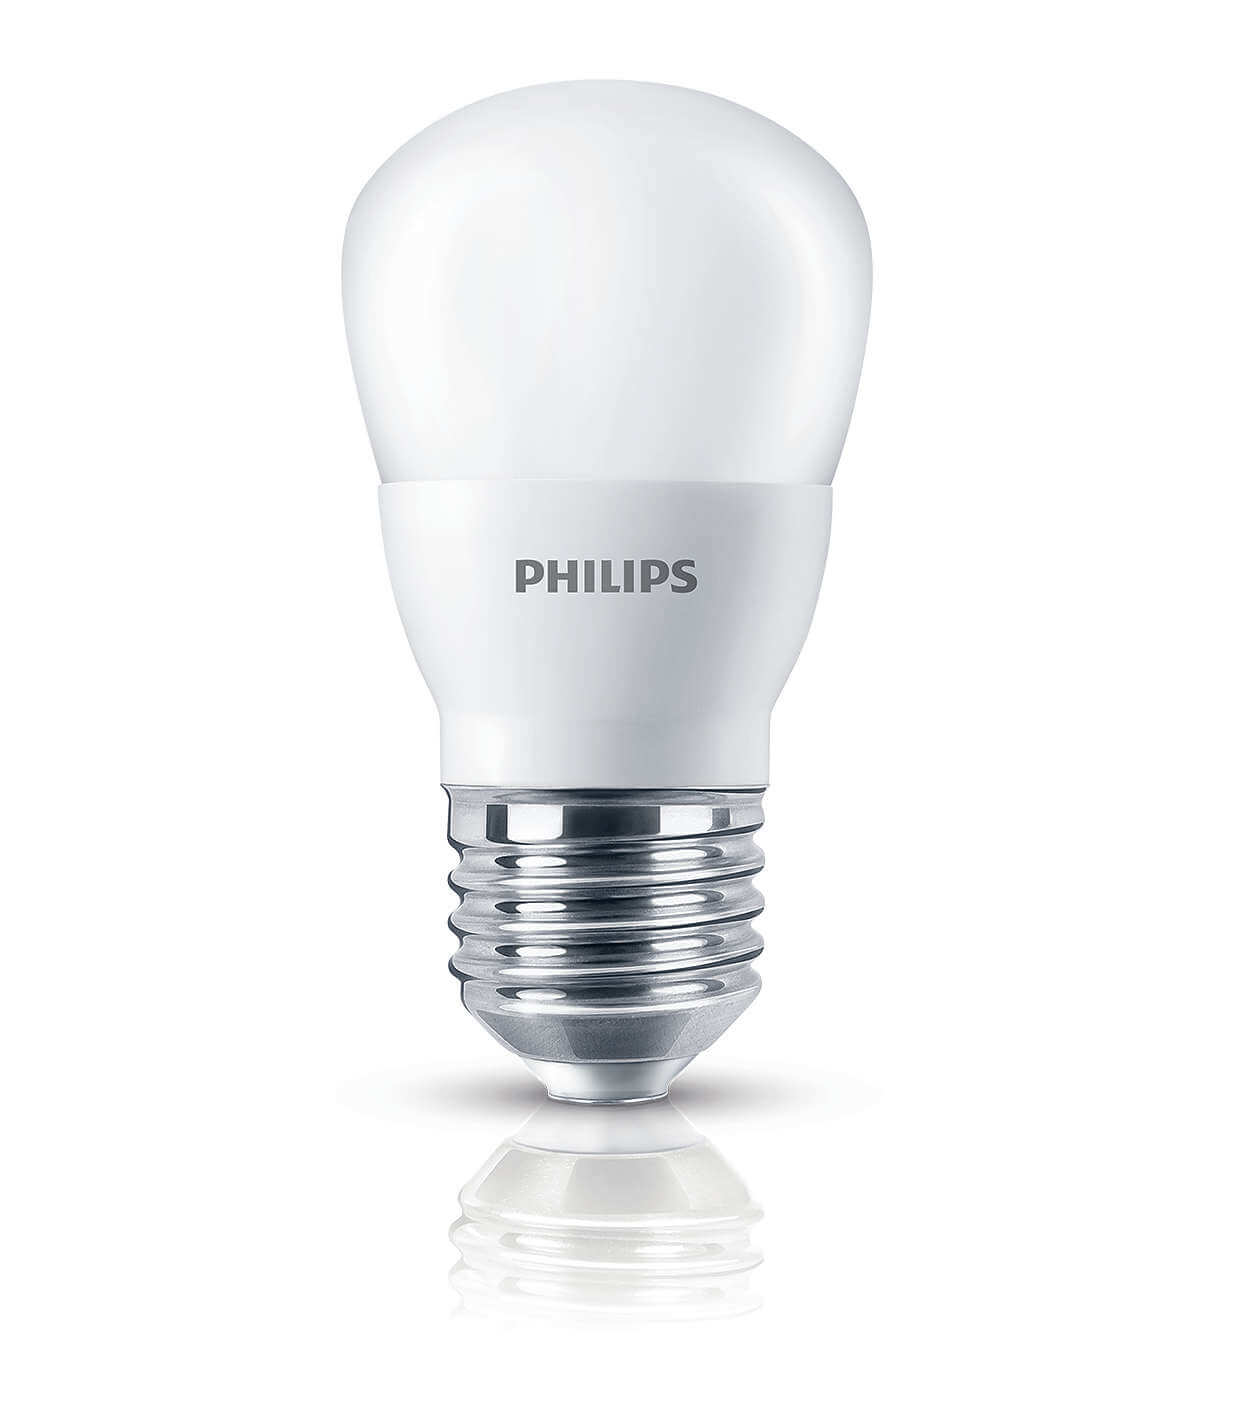 Harga Lampu Philips LED Kilau